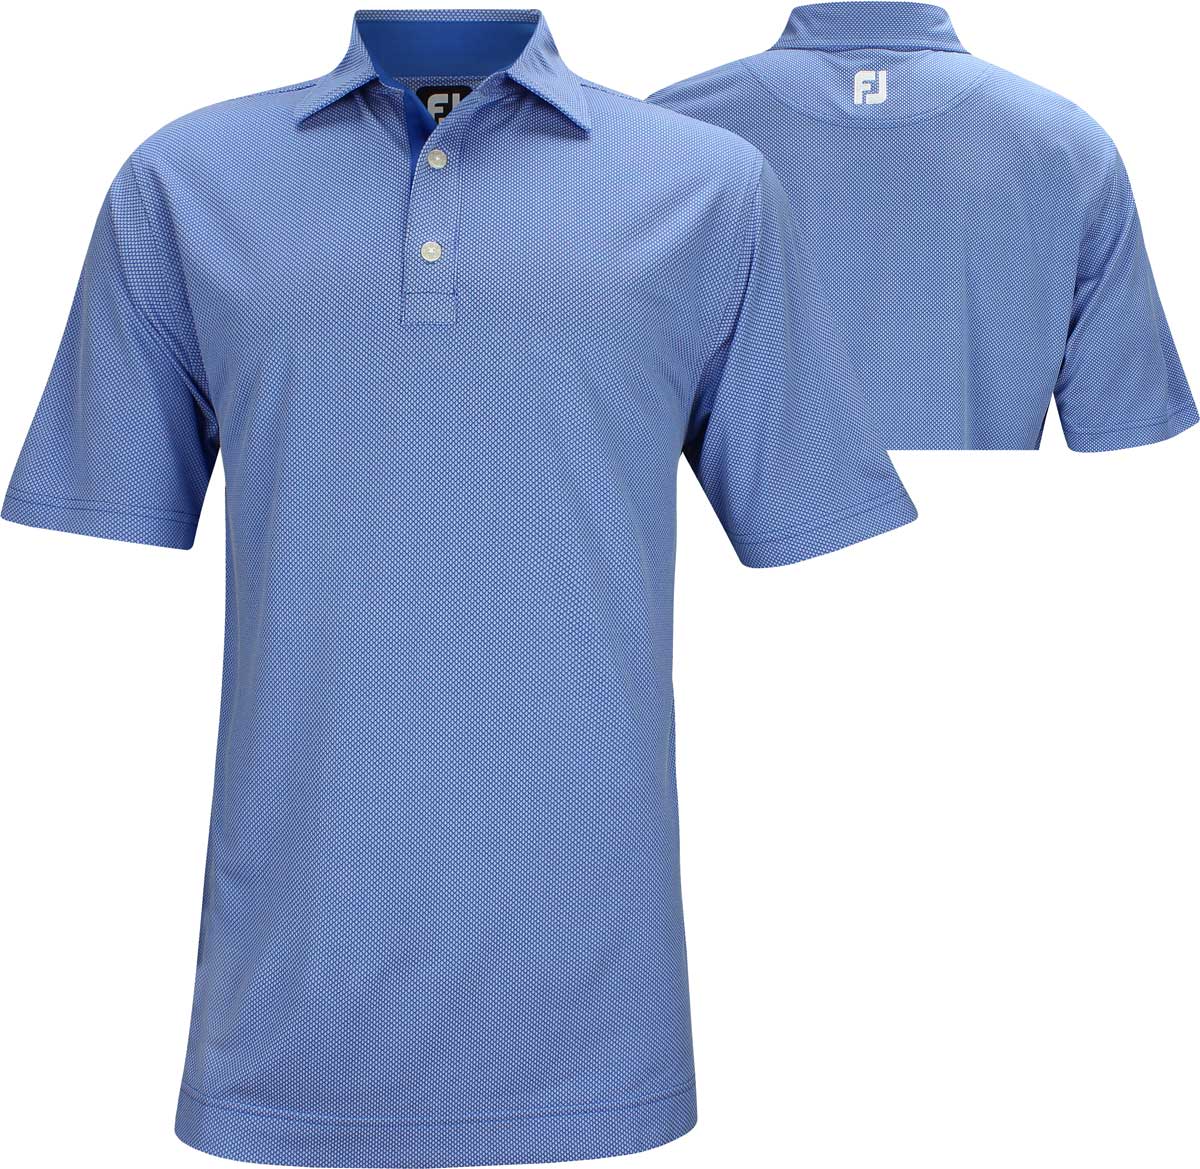 FootJoy ProDry 4 Dot Jacquard Golf Shirts